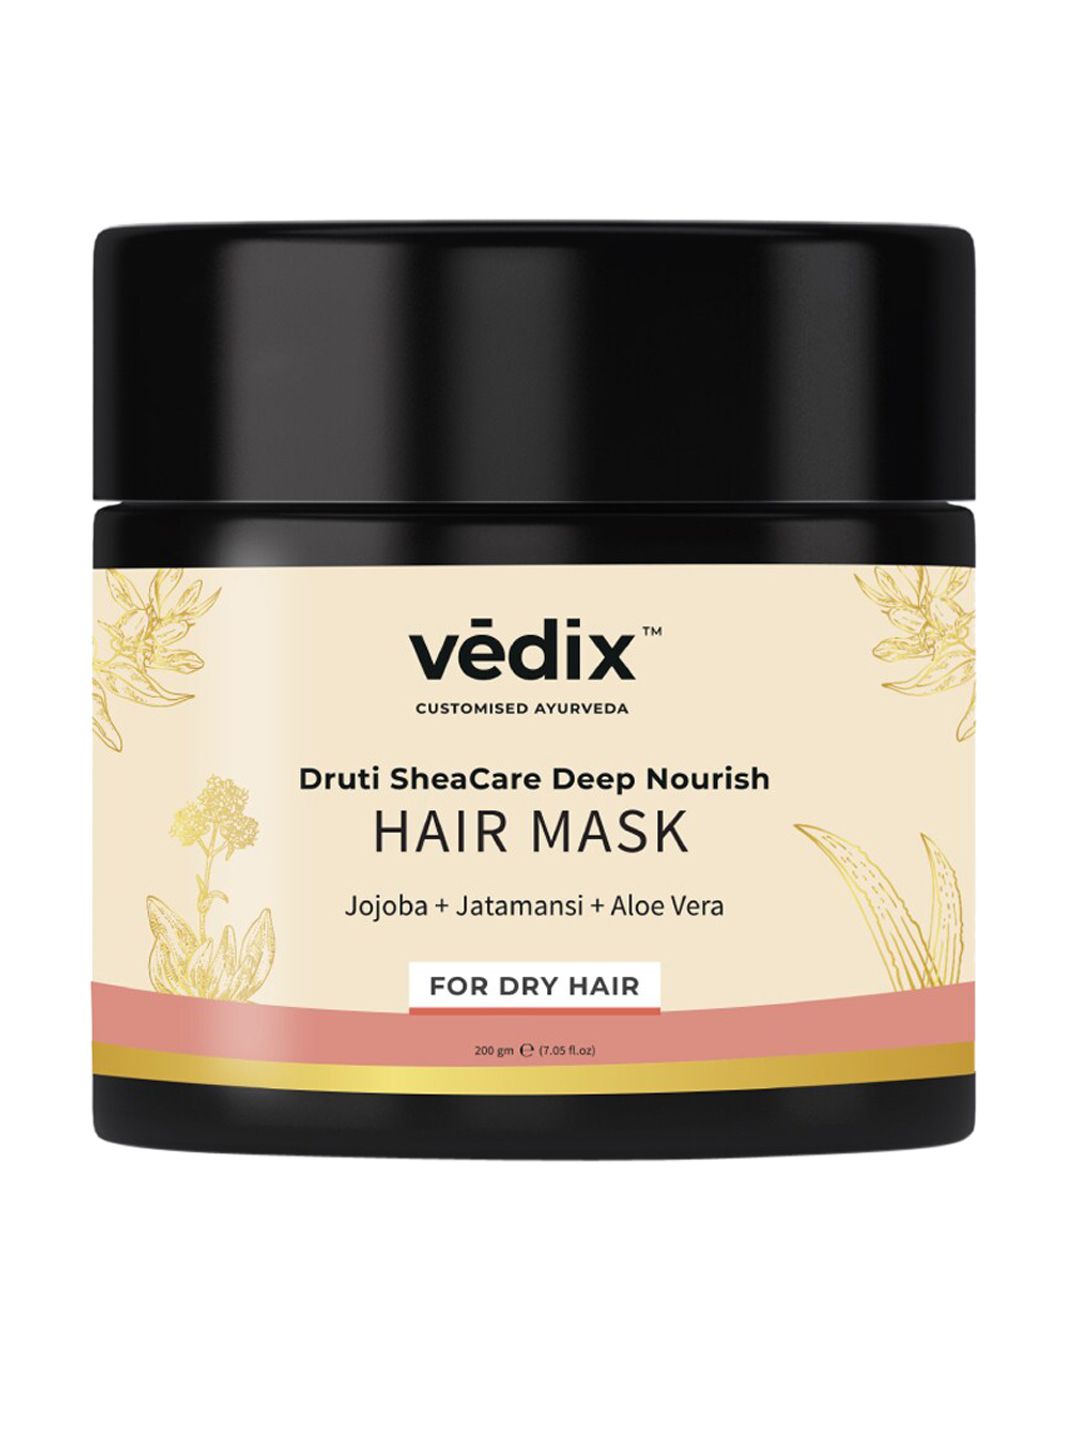 VEDIX Customised Ayurveda Druti SheaCare Deep Nourish Hair Mask 200 gm Price in India